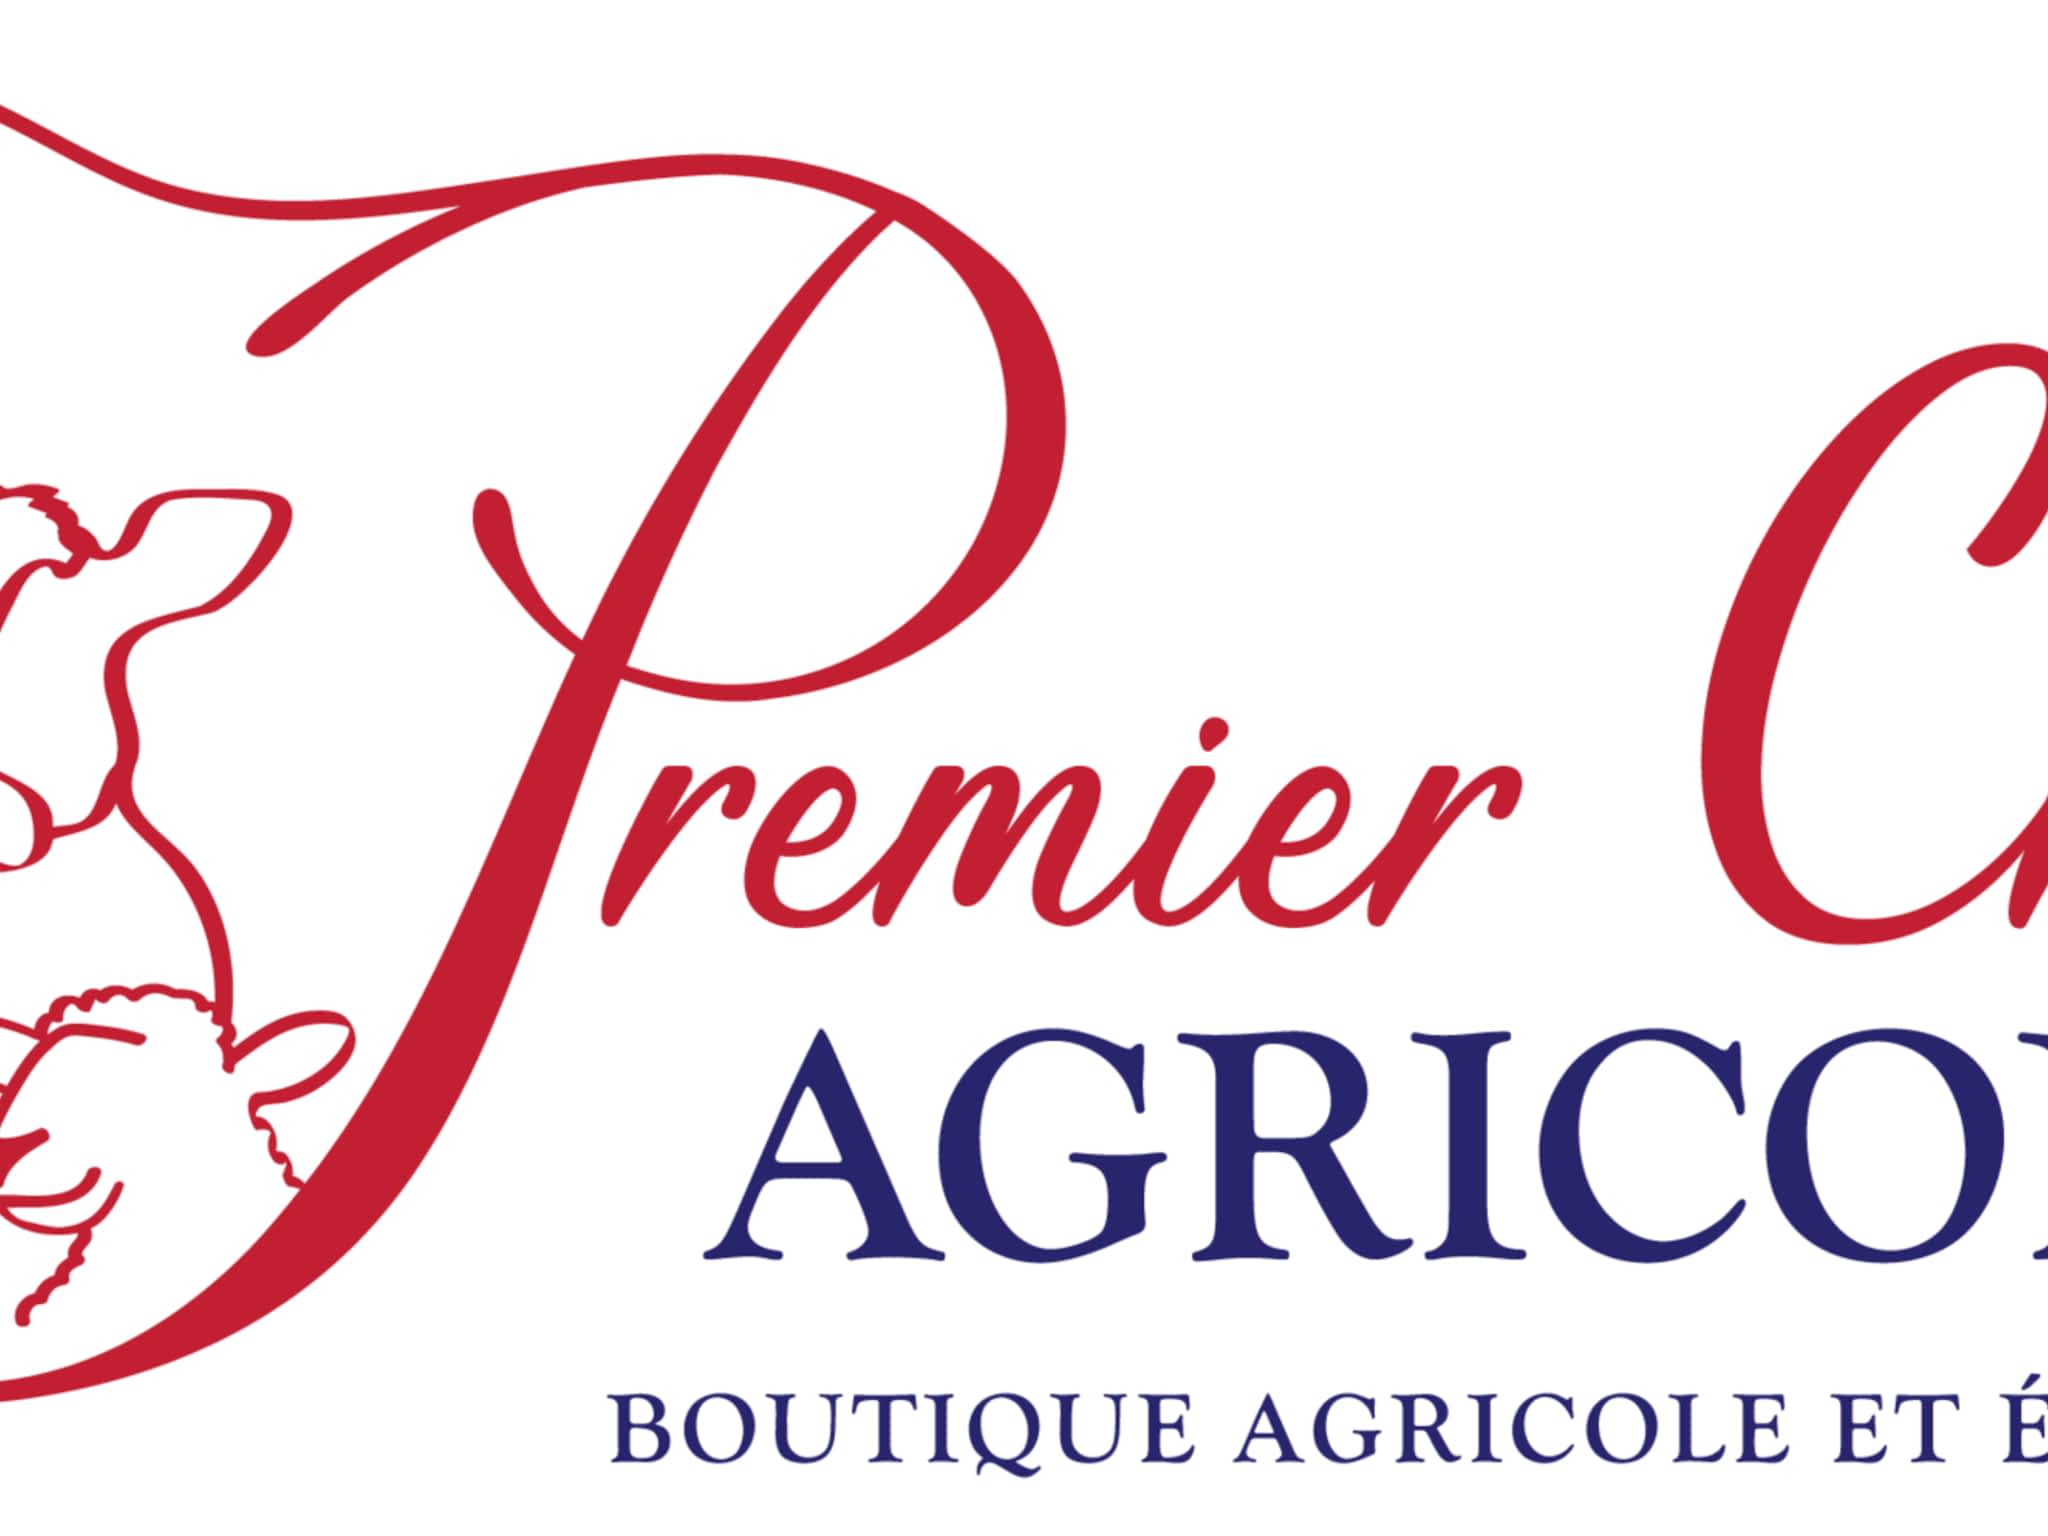 photo CCWG Livestock Supplies / Premier Choix Agricole